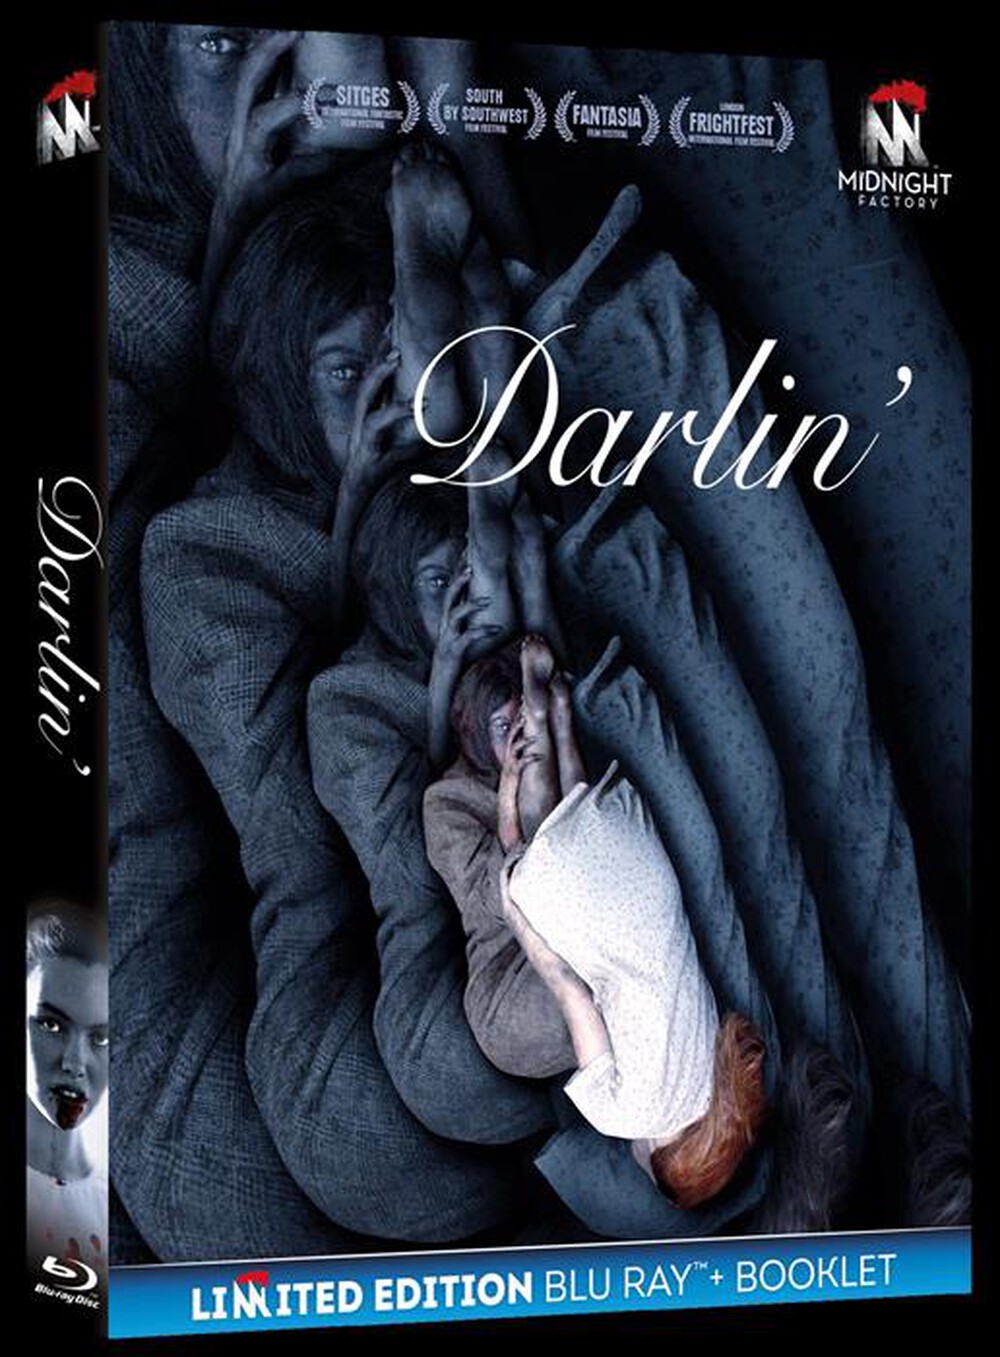 "Midnight Factory - Darlin' (Ltd) (Blu-Ray+Booklet)"